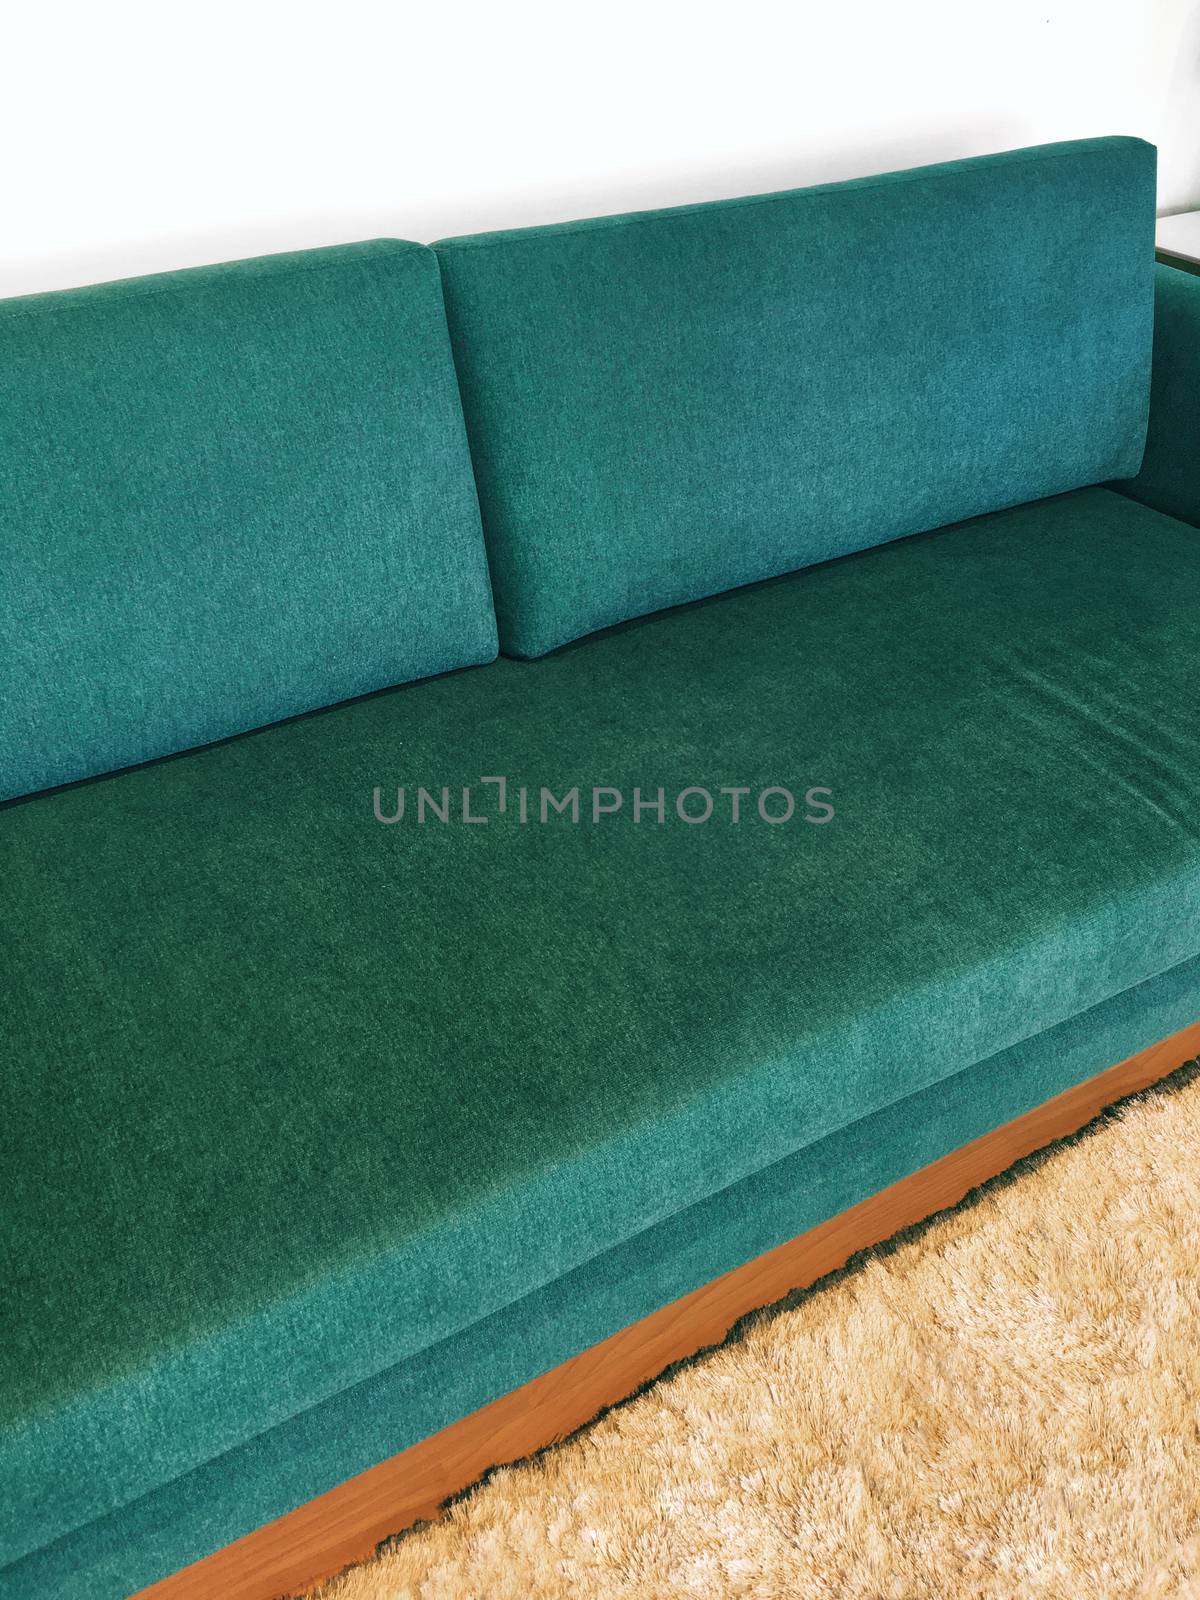 Retro style simple green sofa by anikasalsera